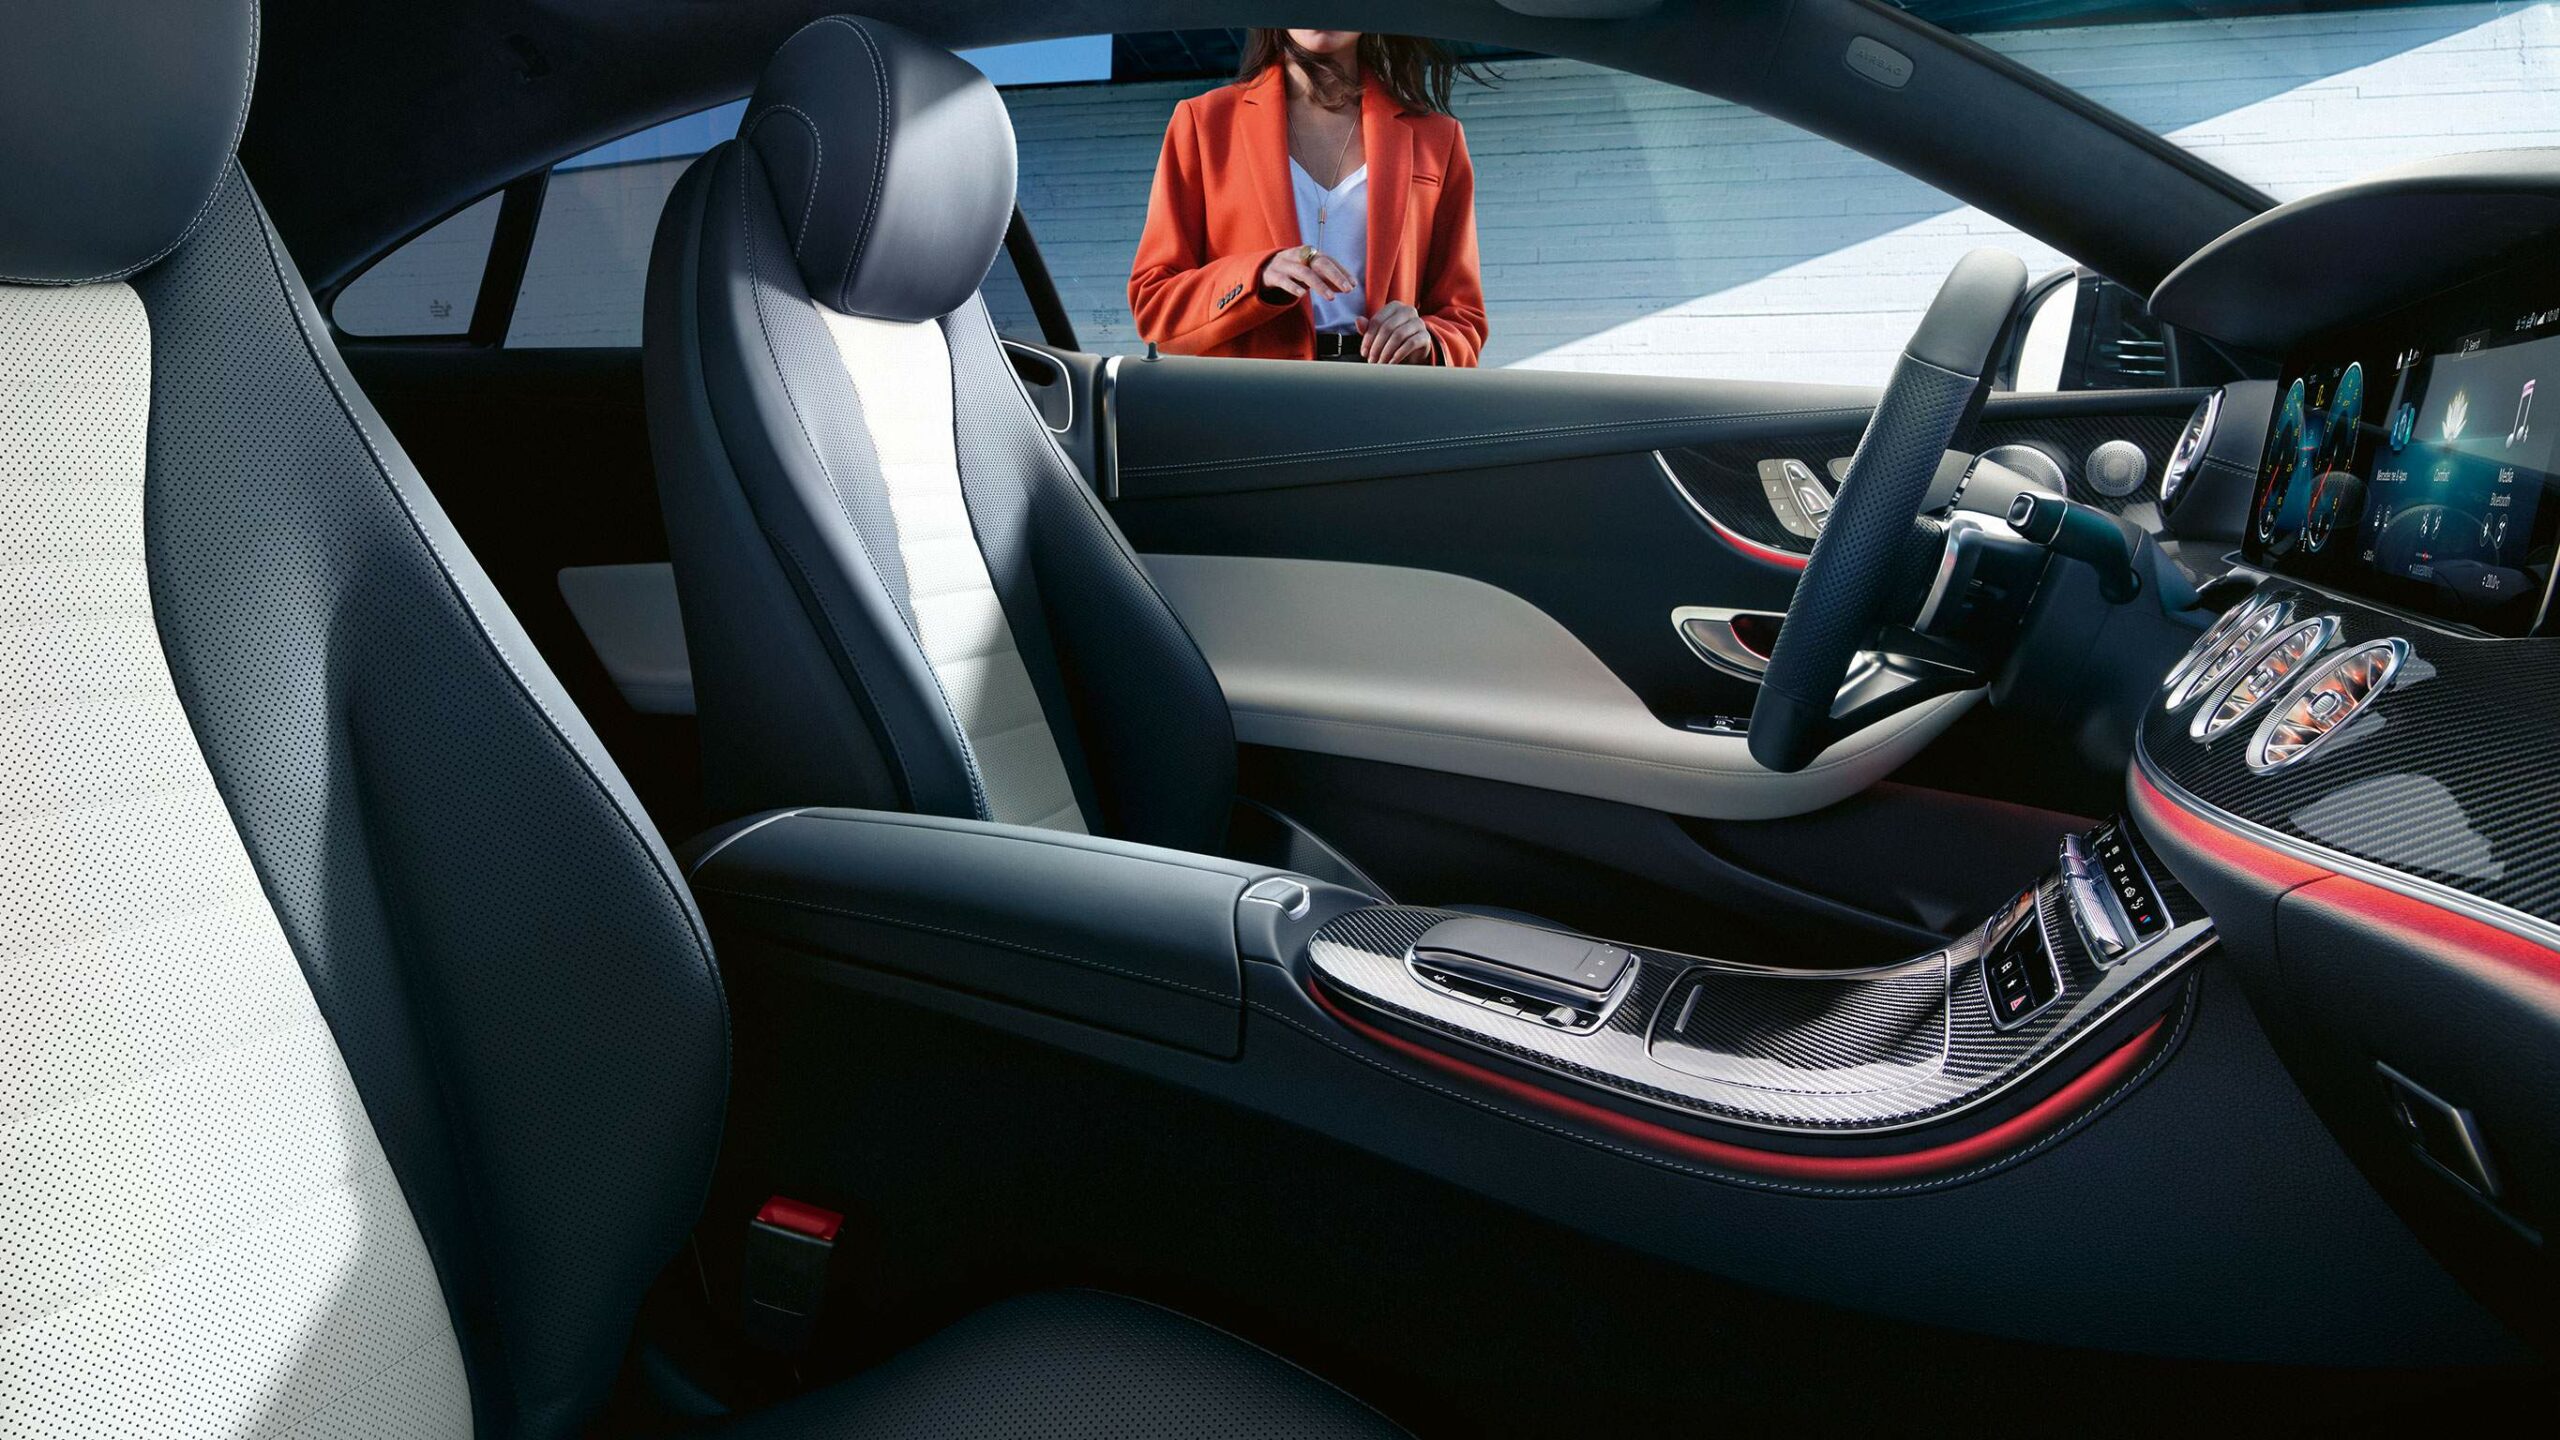 Ambiente interior personalizado dentro de la lujosa Clase E Coupe